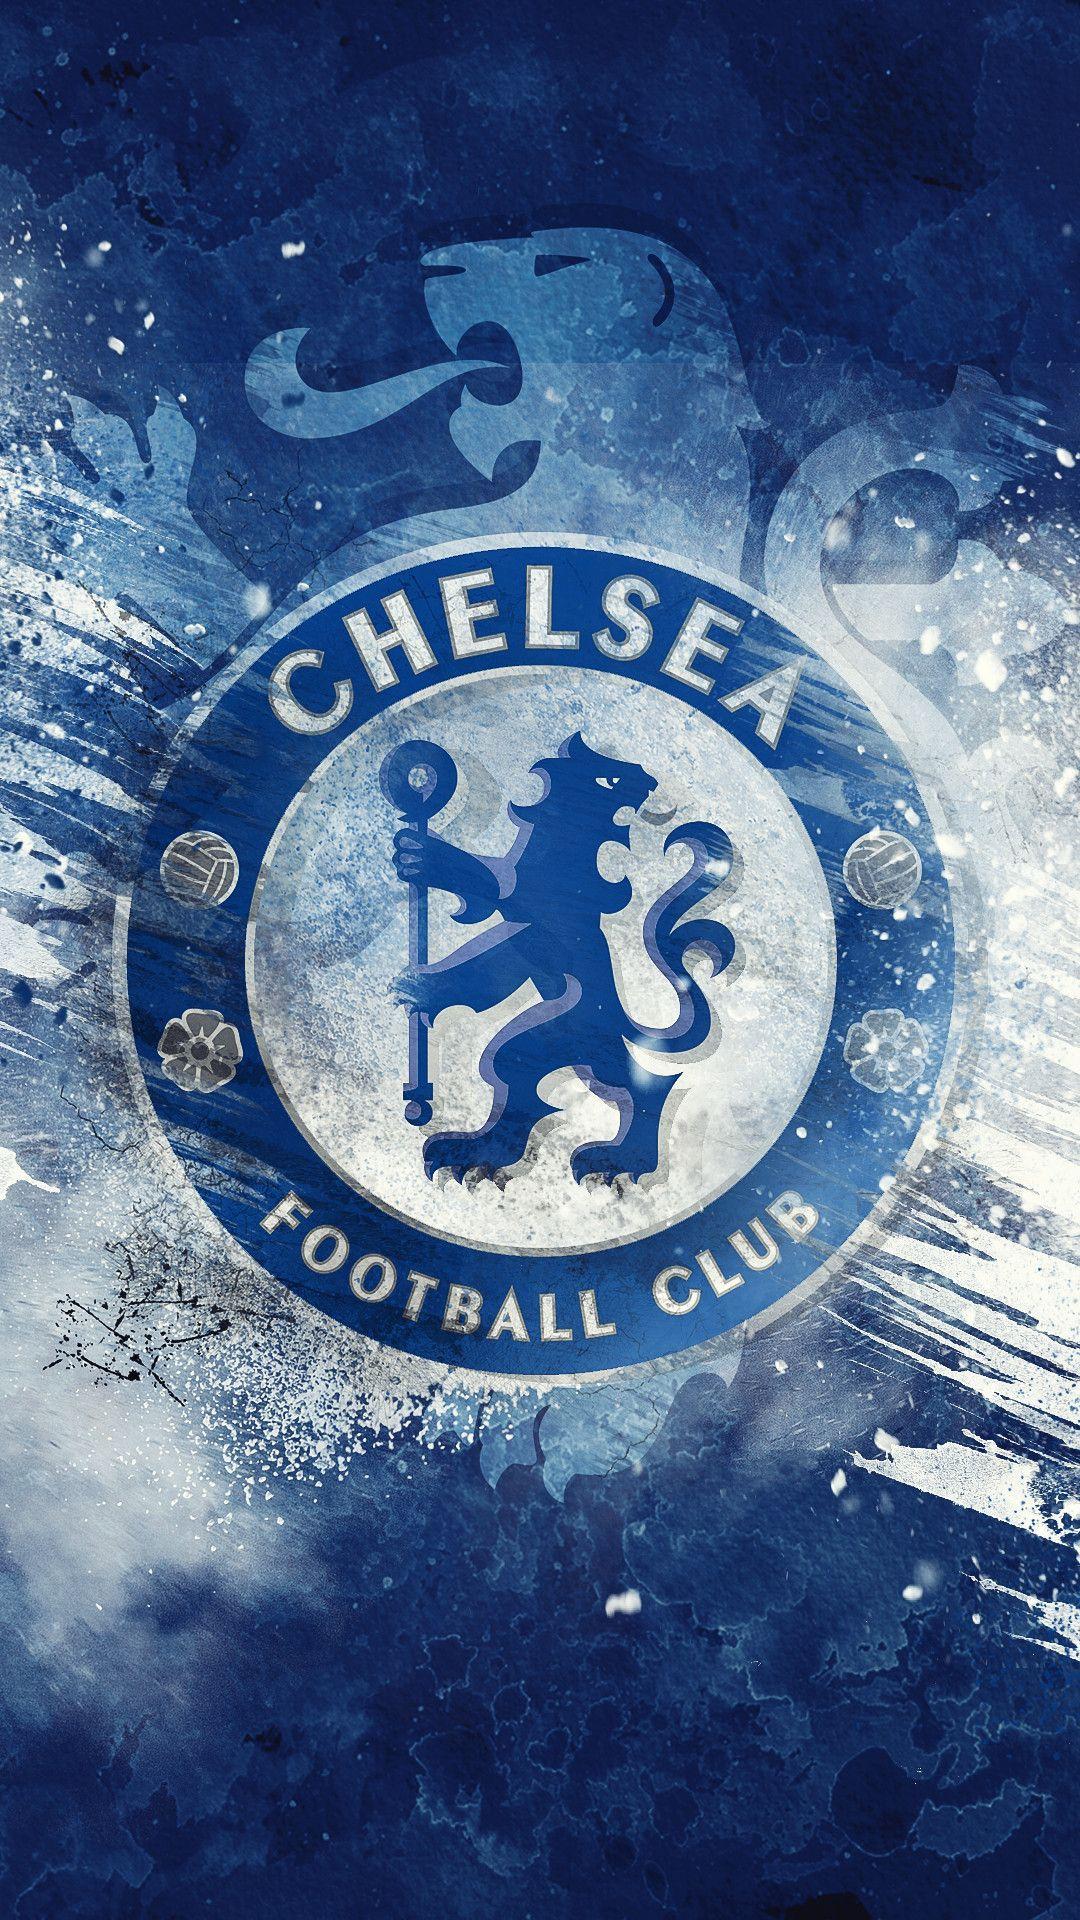 Chelsea Logo Wallpaper by Kerimov23. Chelsea wallpaper, Chelsea football, Chelsea football club wallpaper